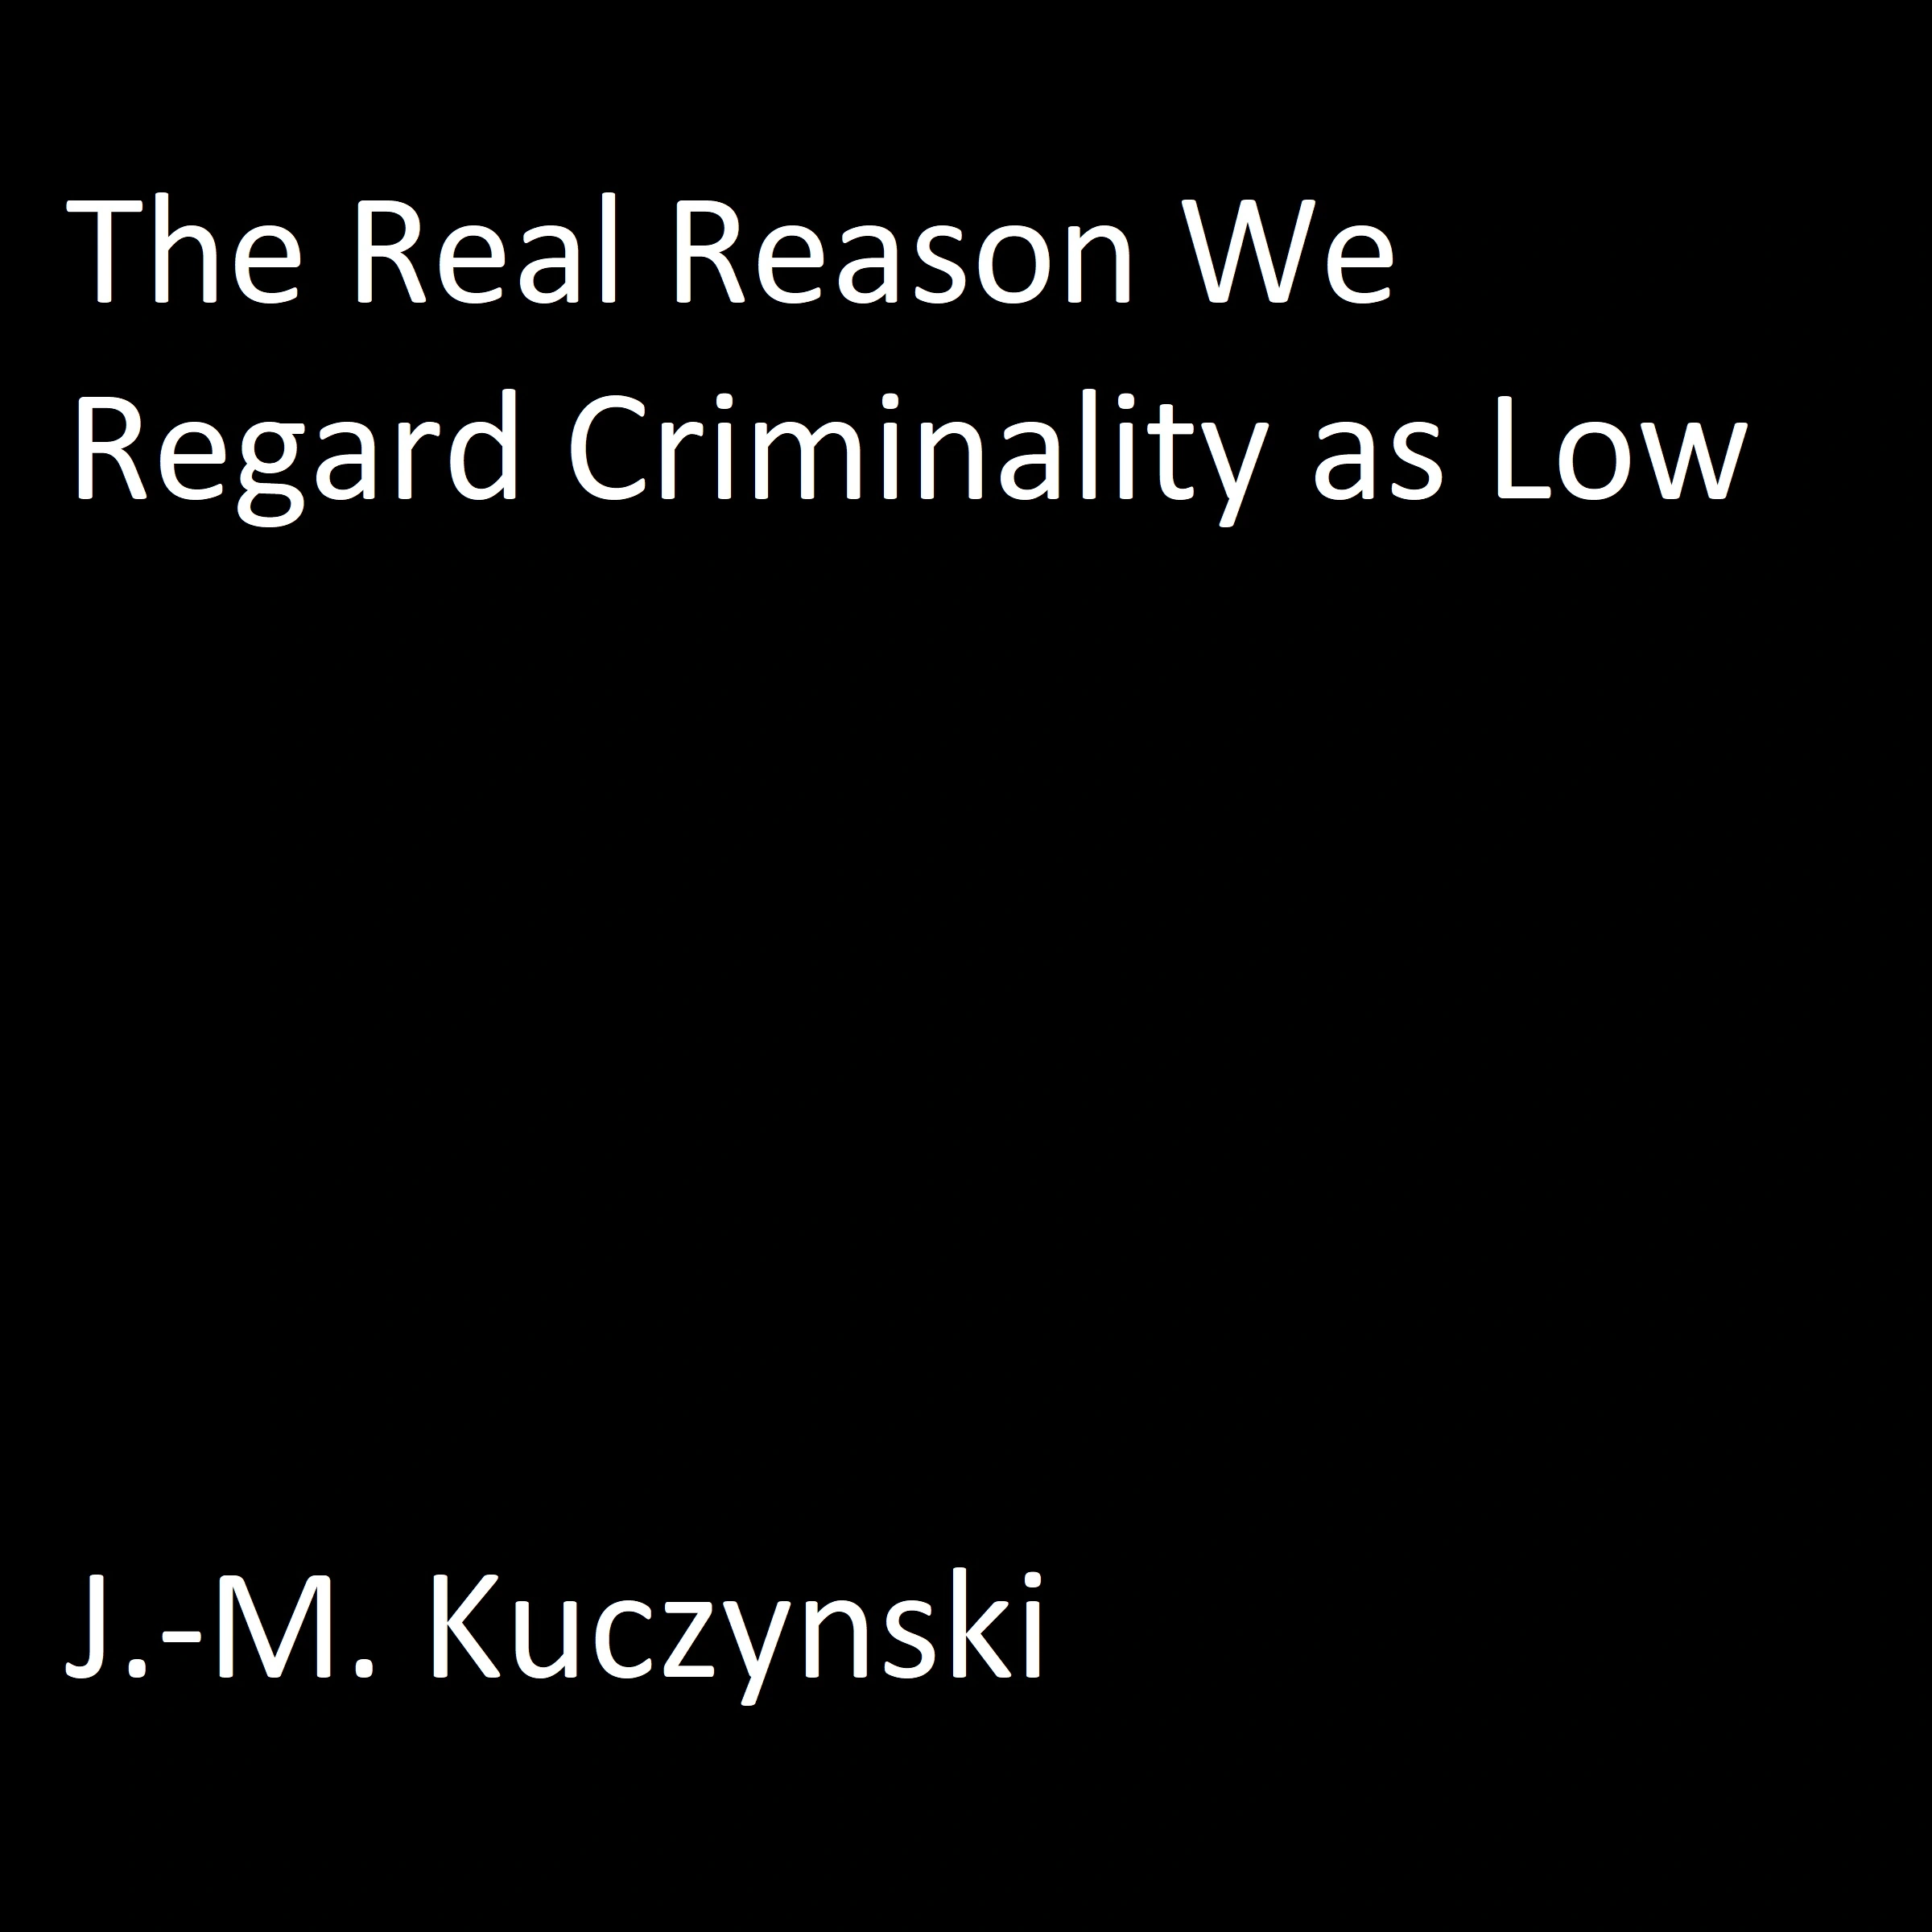 The Real Reason We Regard Criminality as Low Audiobook by J.-M. Kuczynski